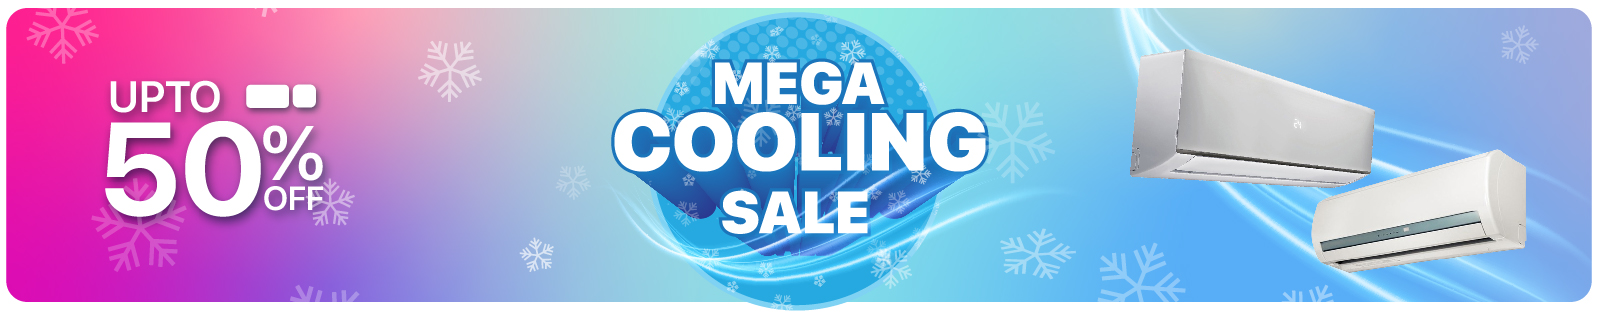 Mega-Cooling-Deals-01.jpg